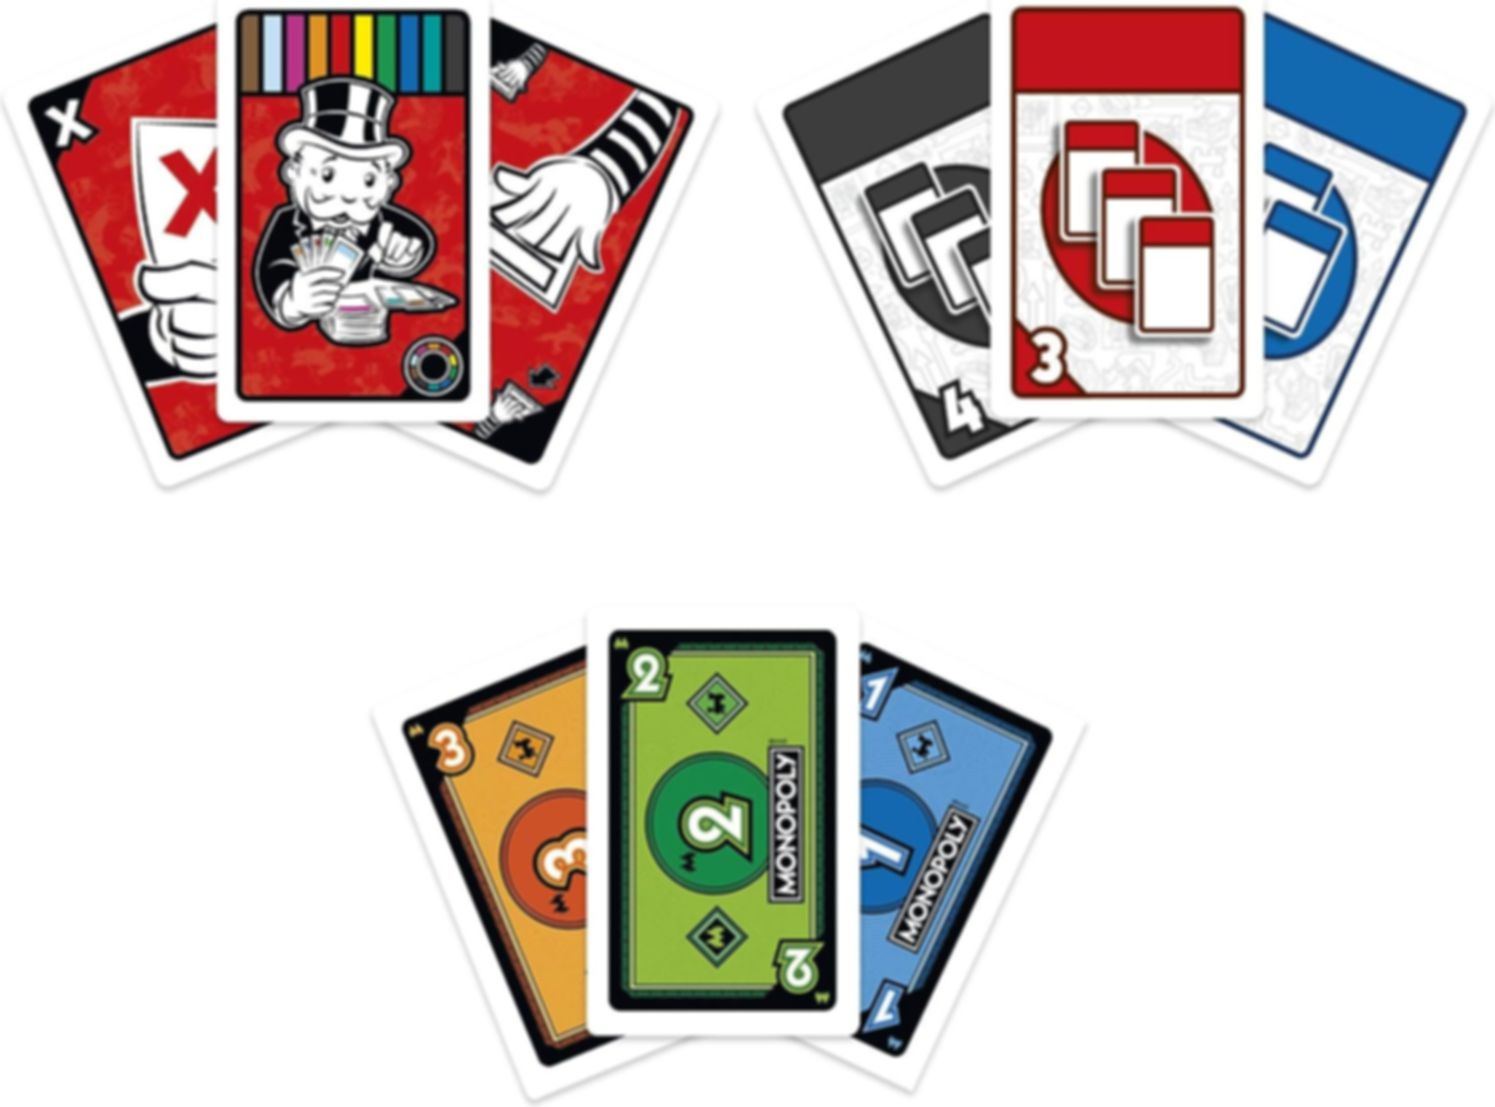 Monopoly 3,2,1 cartes